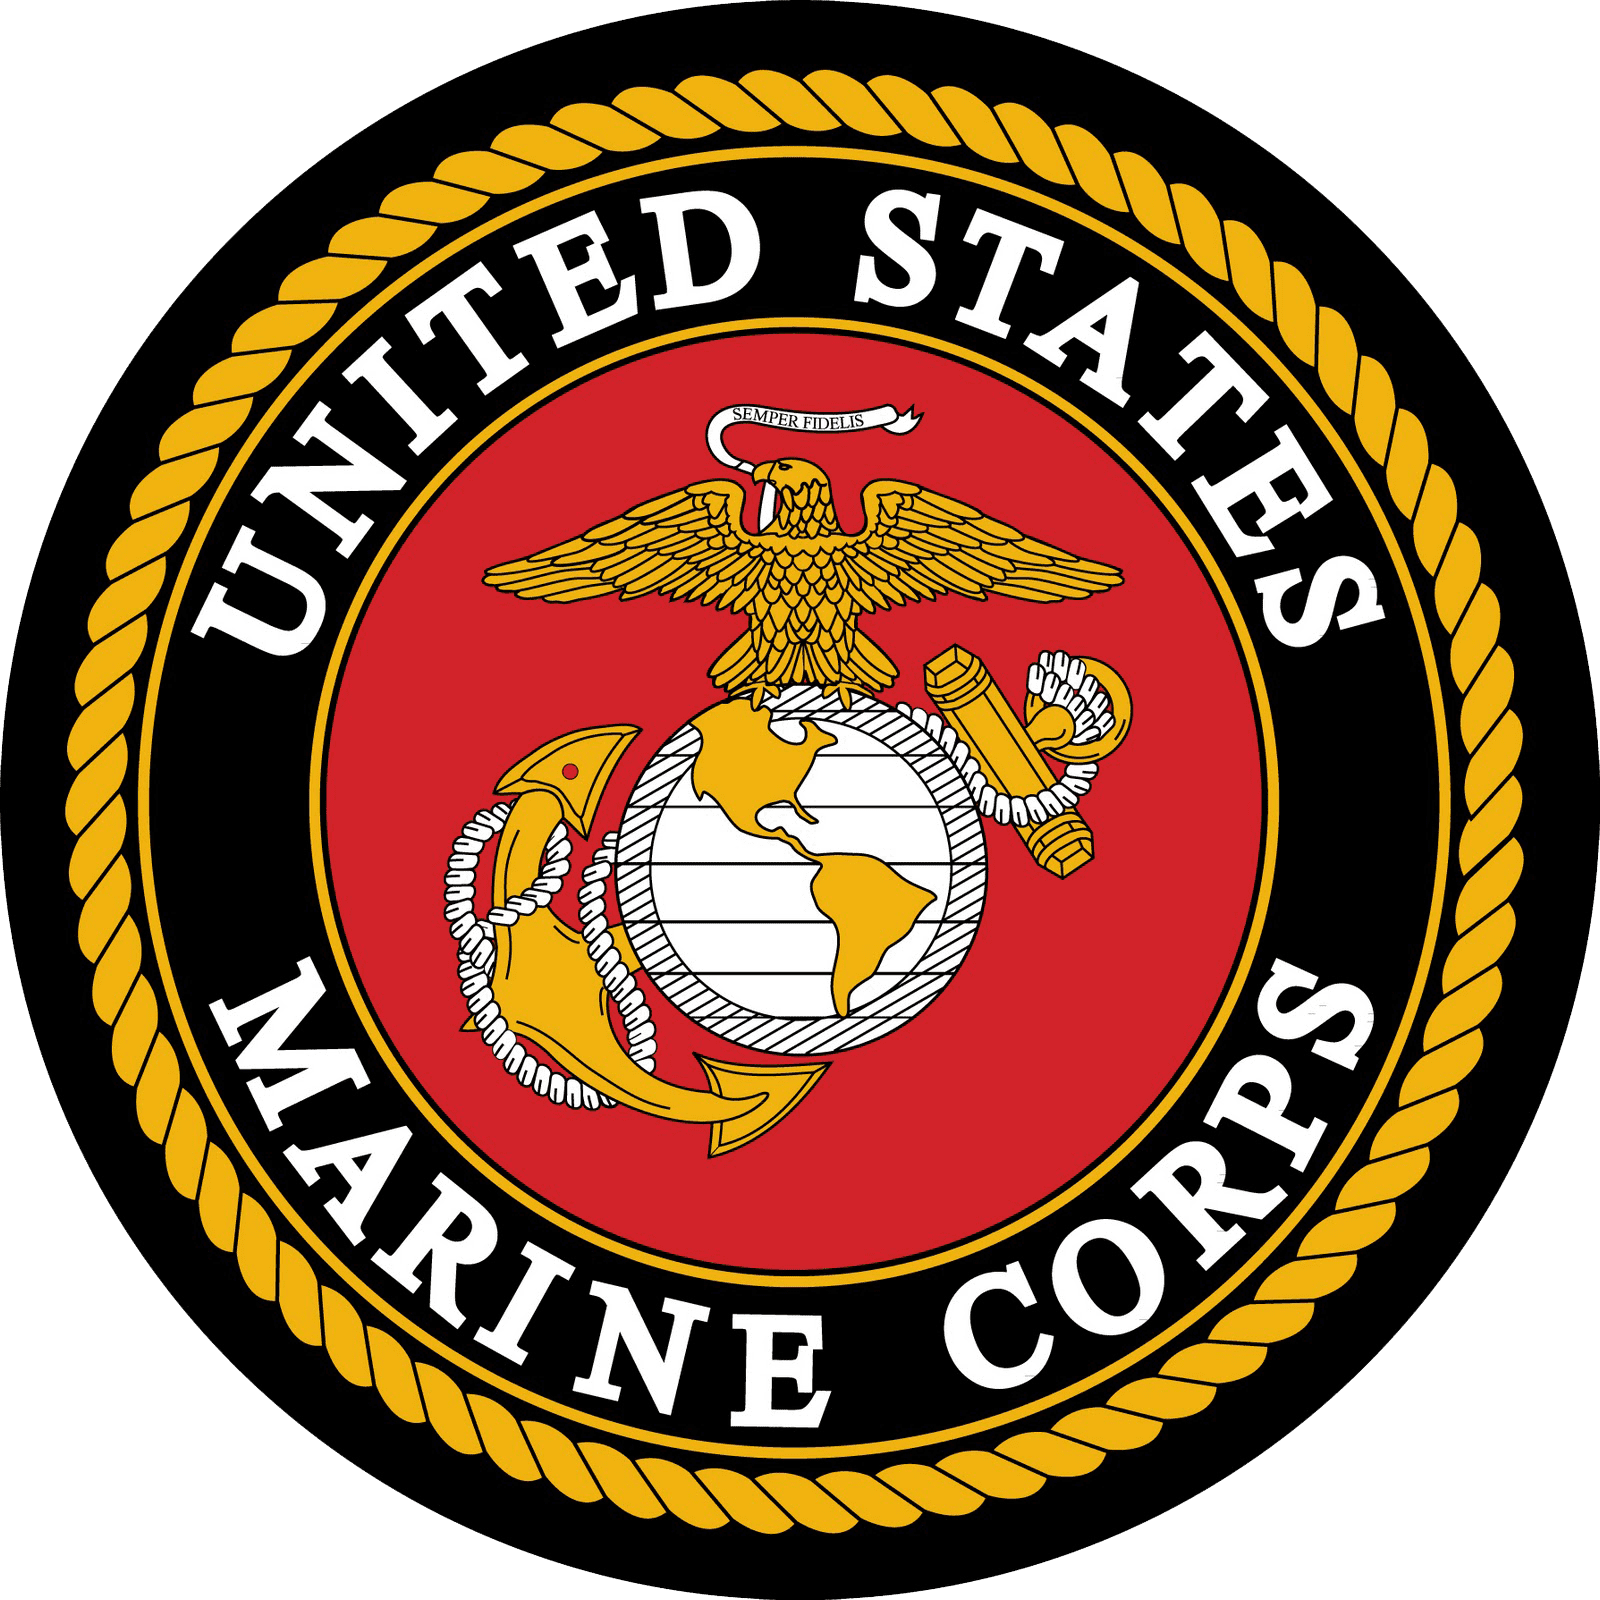 United States Marine Corps Facilities